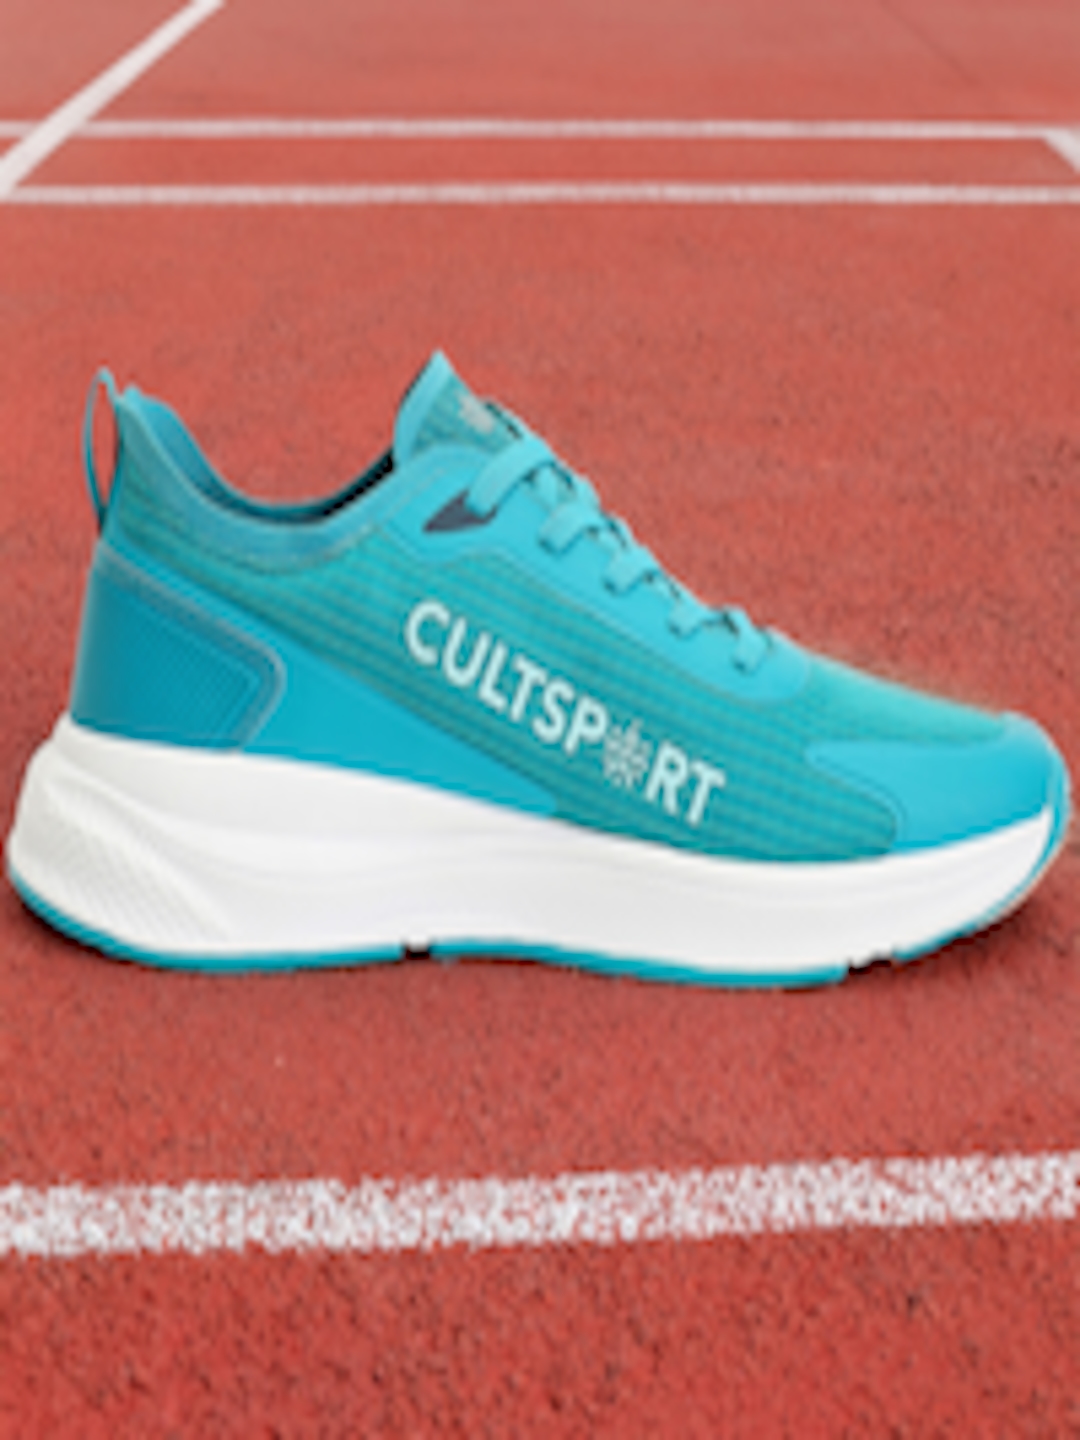 Buy Cultsport Men Comfort Mesh Running Shoes - Sports Shoes for Men ...